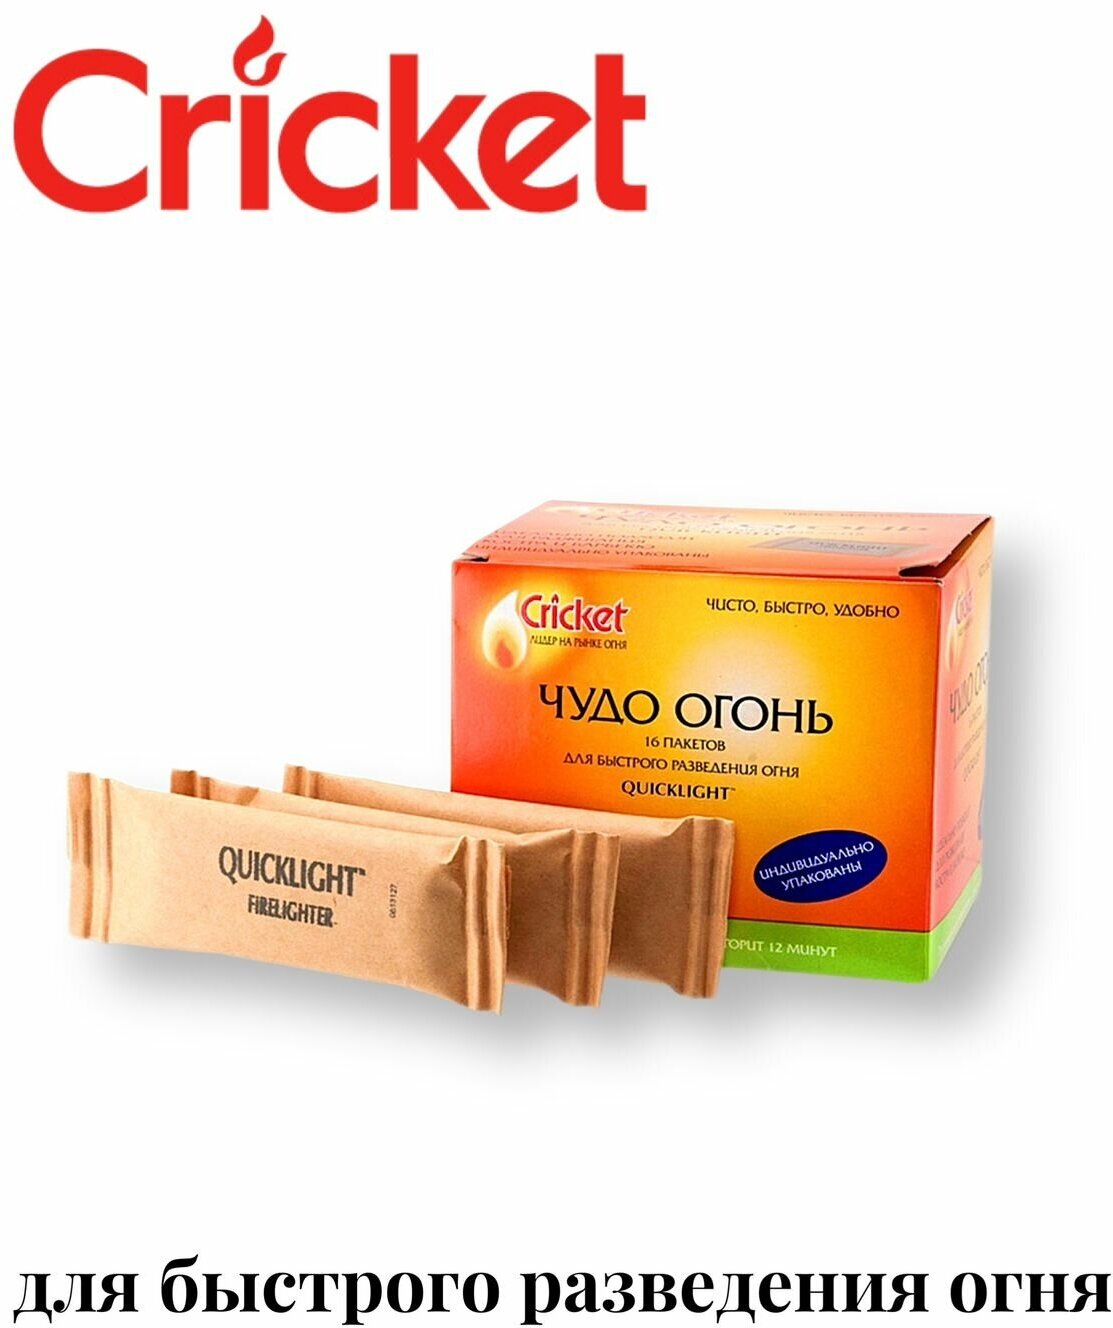 Чудо огонь Cricket